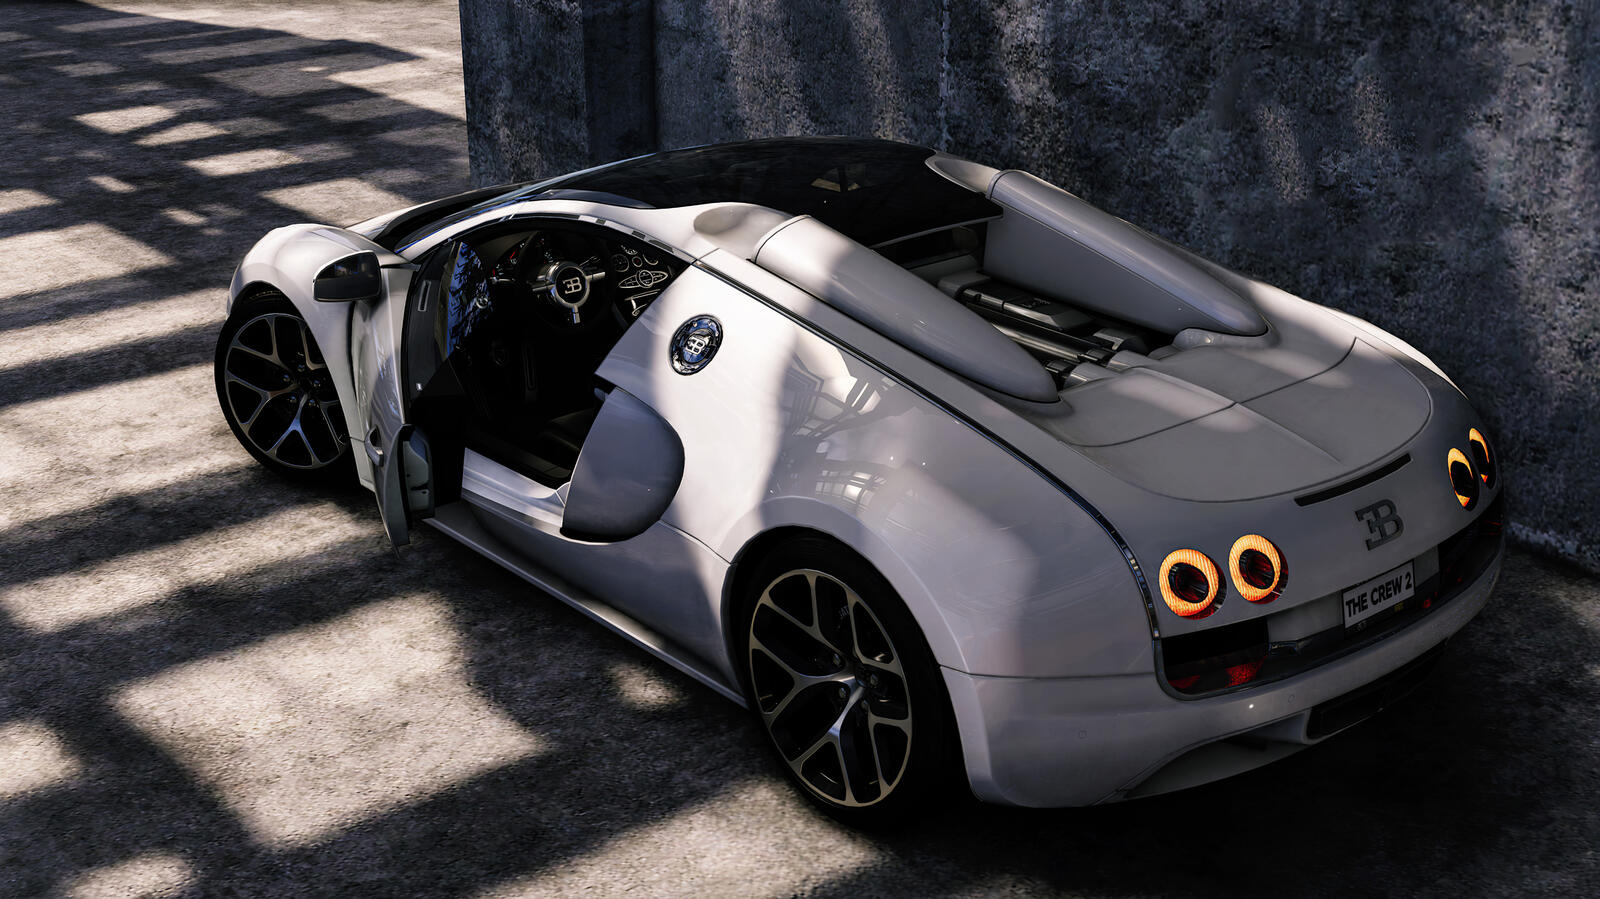 Free photo White Bugatti Veyron rear view with lights on